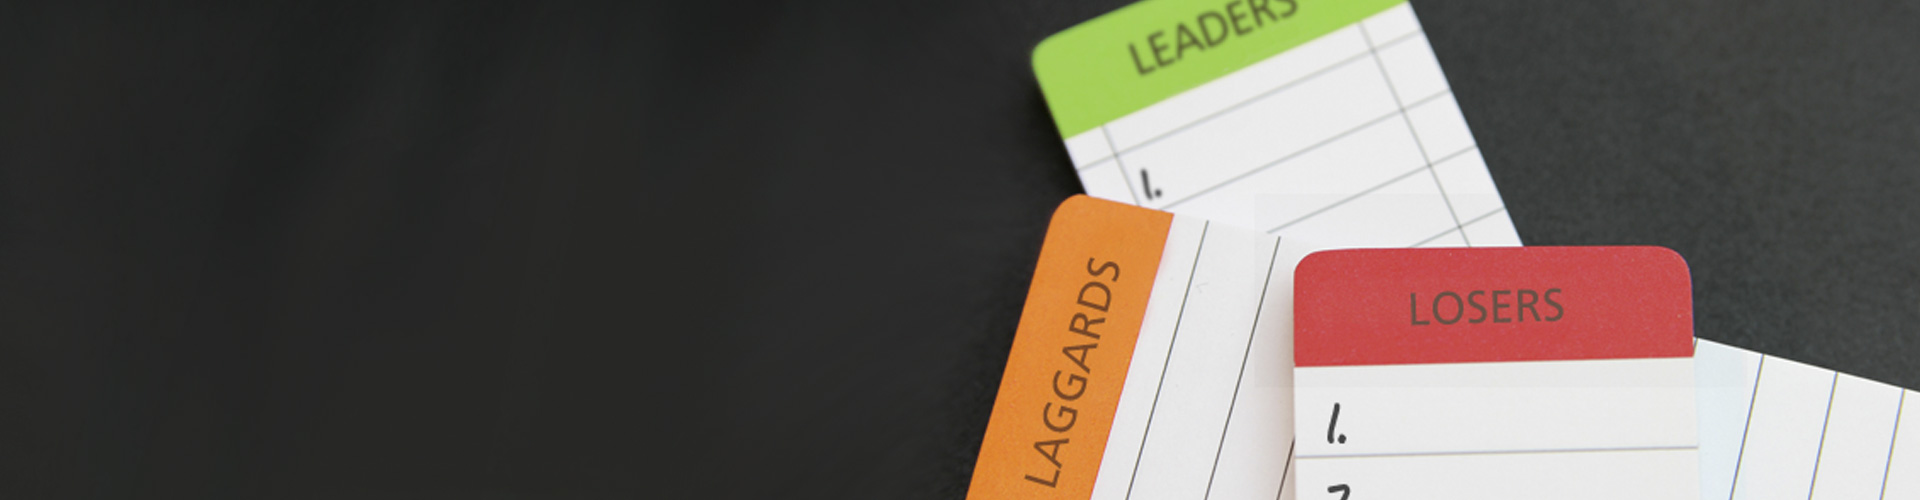 Elson Associates - Leaders, Laggards, Losers - Criteria